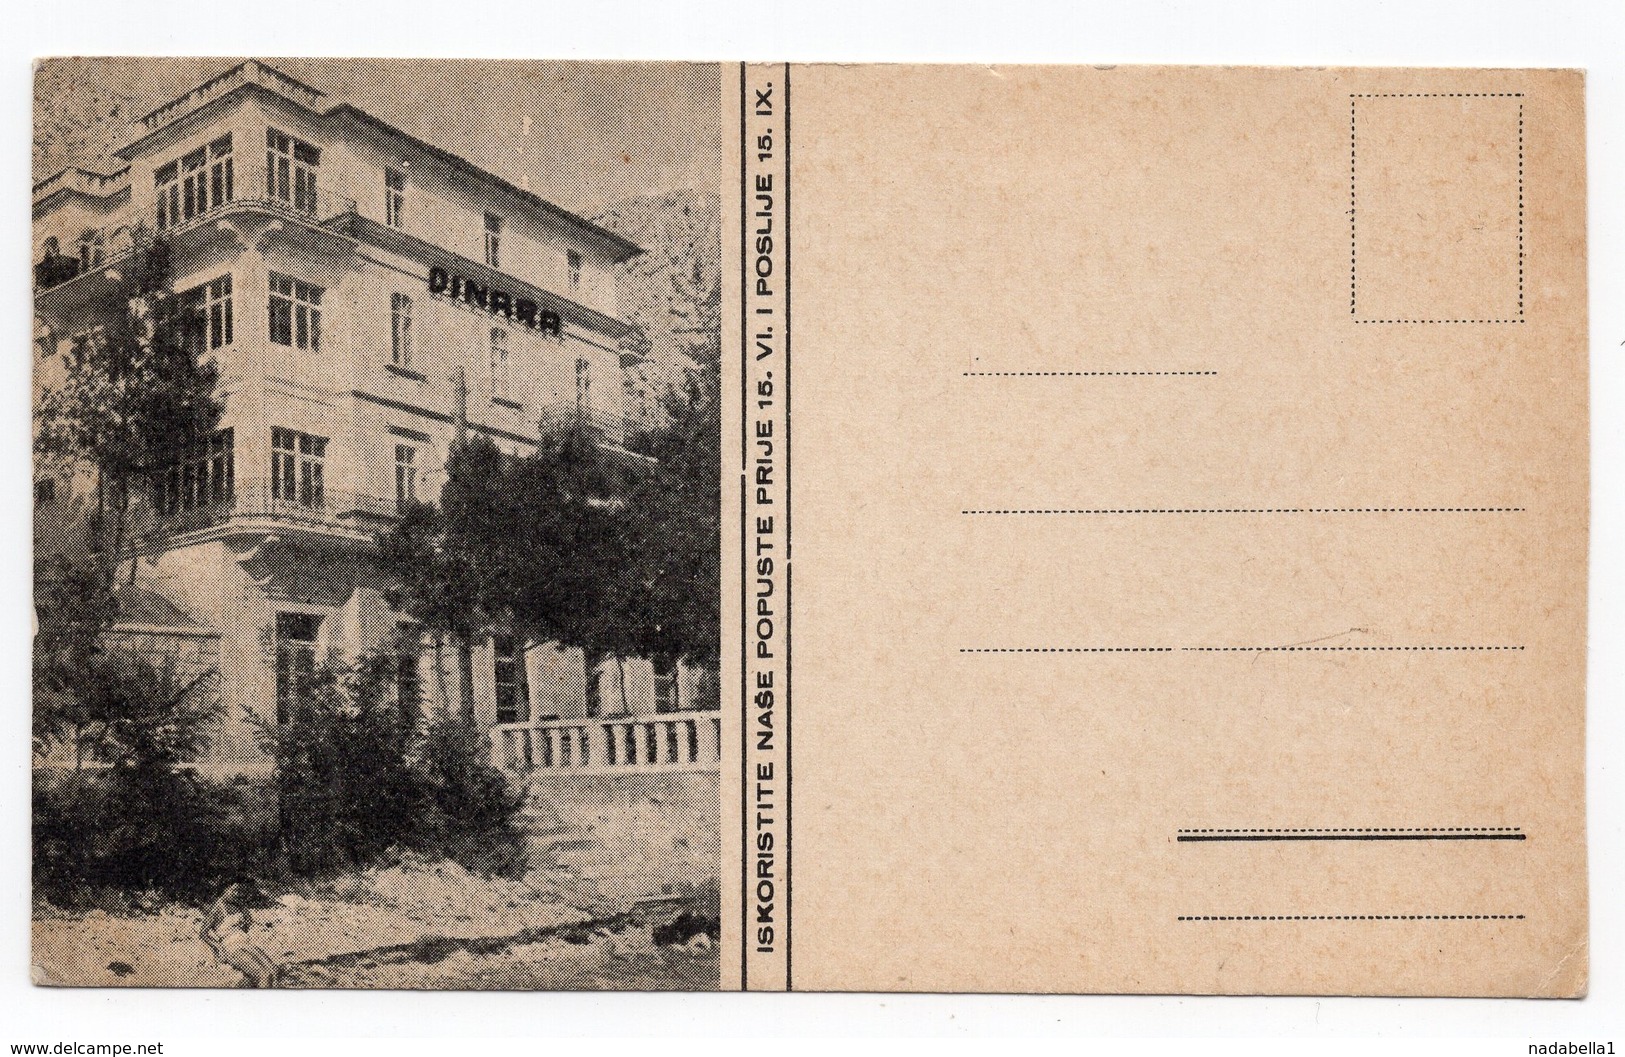 1950s YUGOSLAVIA, CROATIA, HOTEL DINARA, ILLUSTRATED POSTCARD, MINT - Jugoslavia